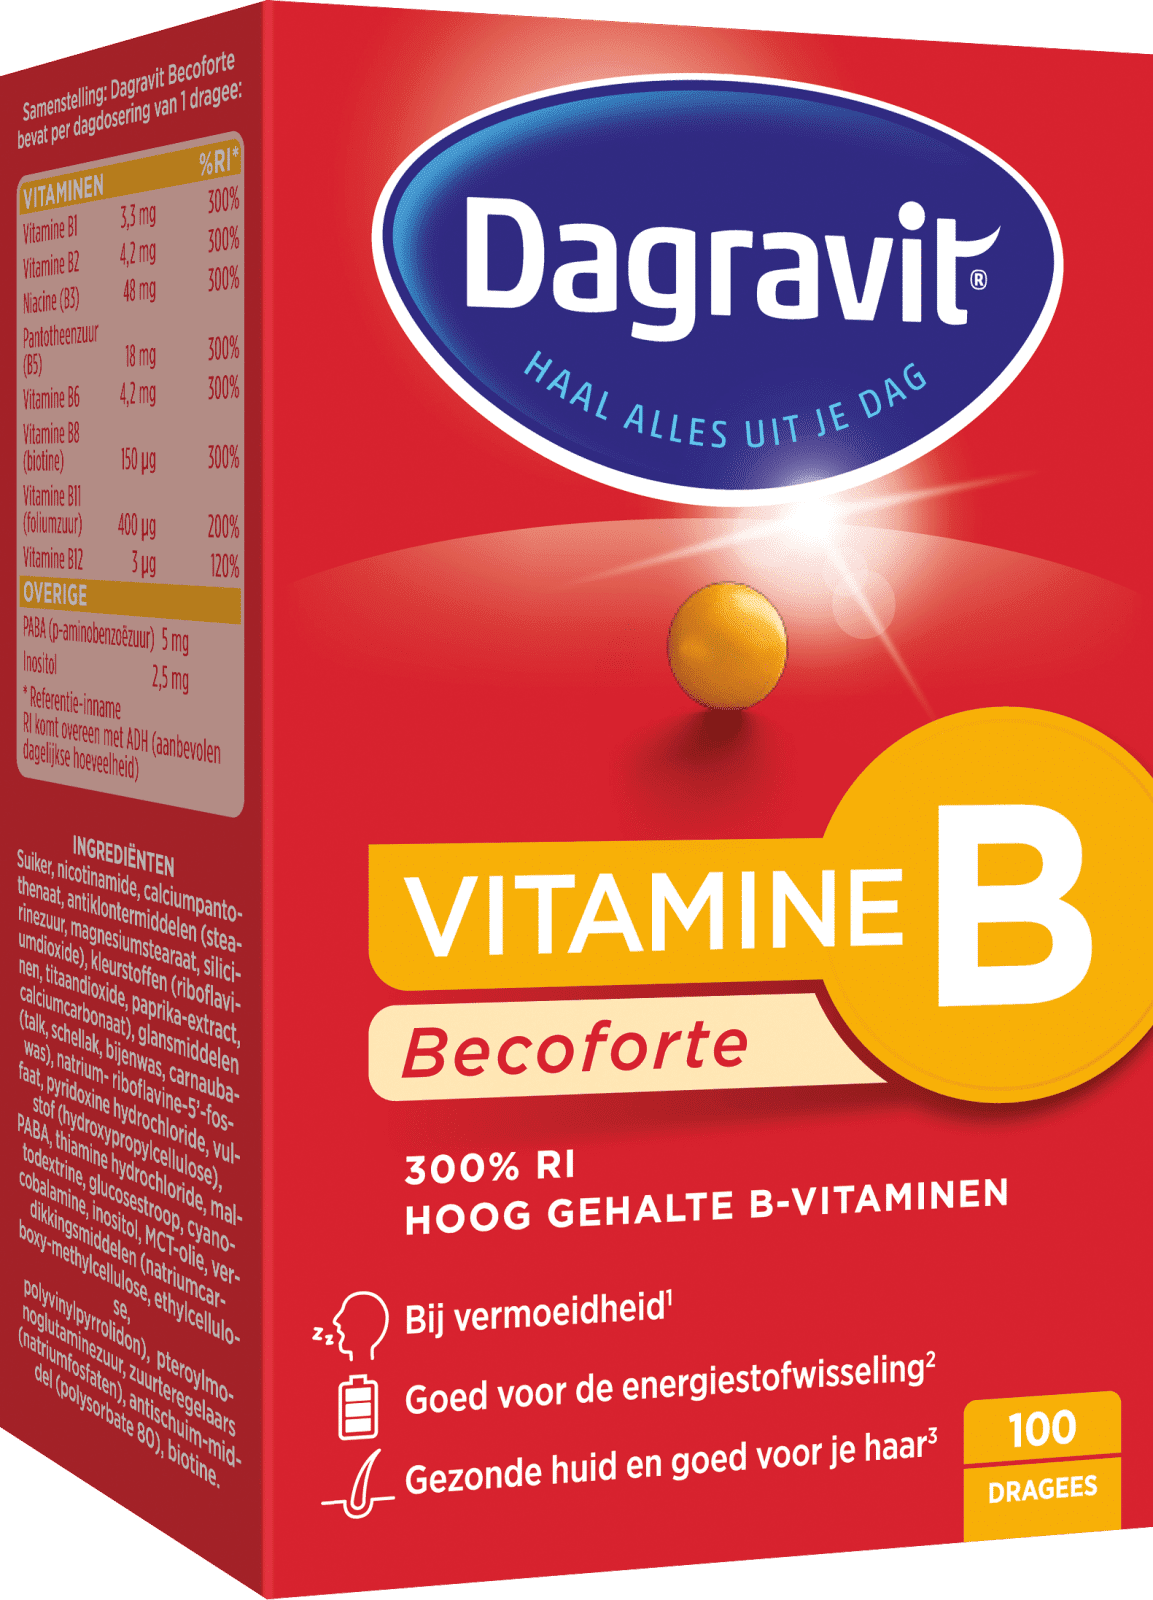 Wacht even evenwicht zakdoek Vitamine B Becoforte - Dagravit